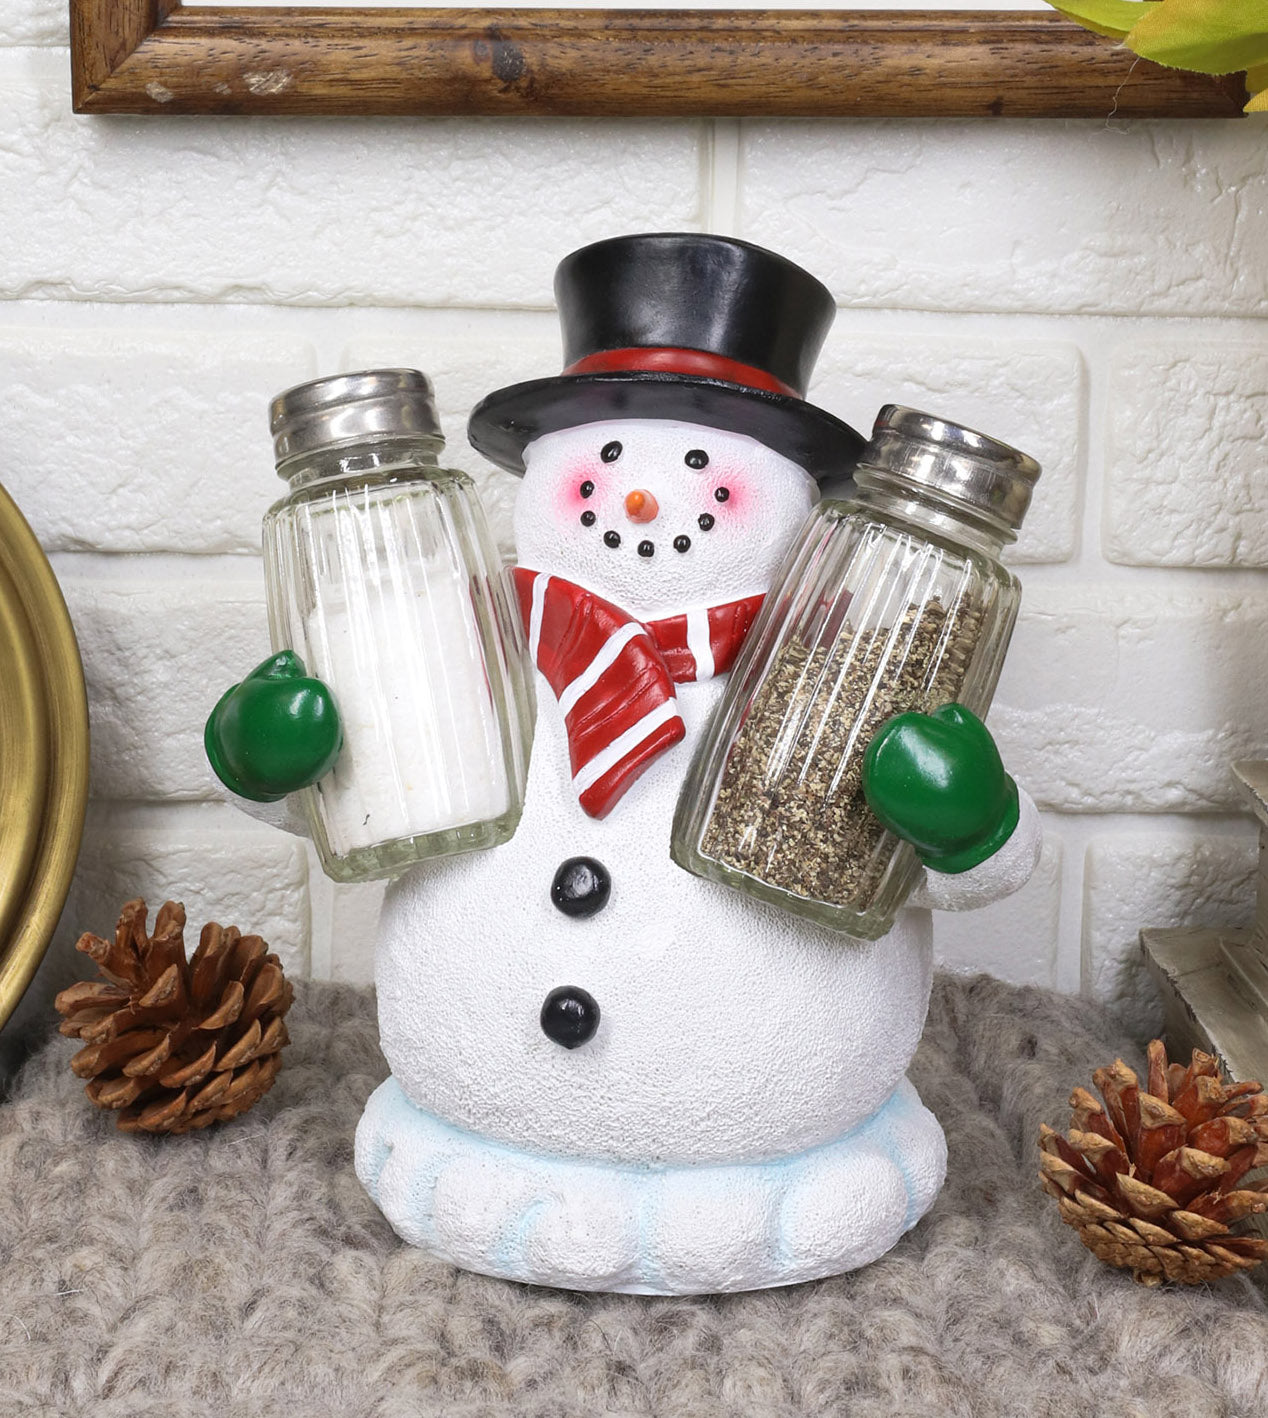 Ebros Gift Christmas Winter Snowman Decorative Glass Salt Pepper Shakers Holder Figurine